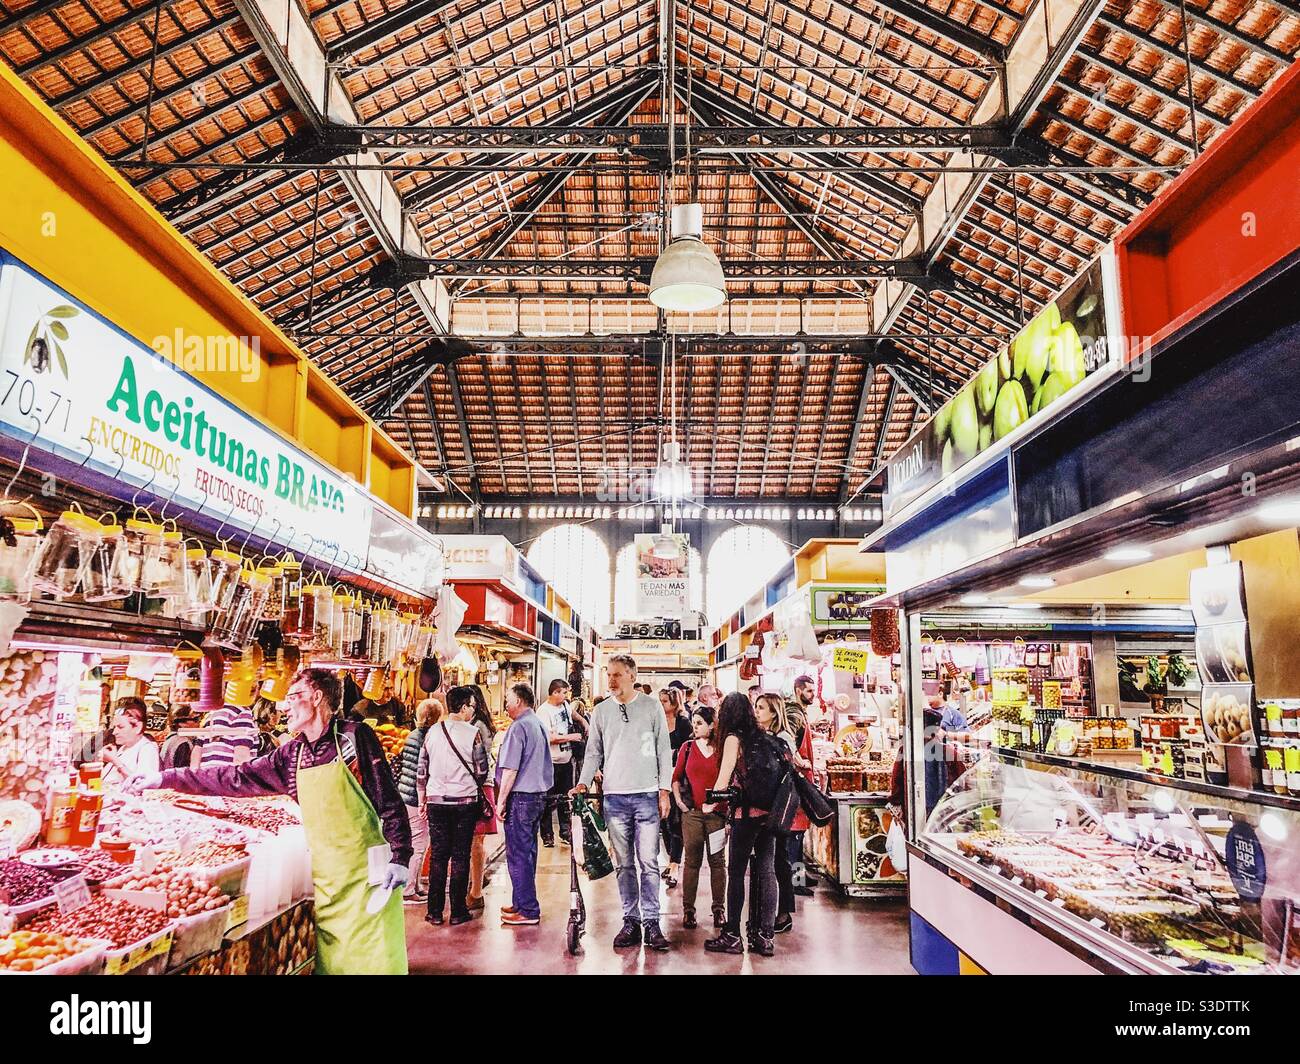 Mercado cubierto malaga fotografías e imágenes de alta resolución - Alamy